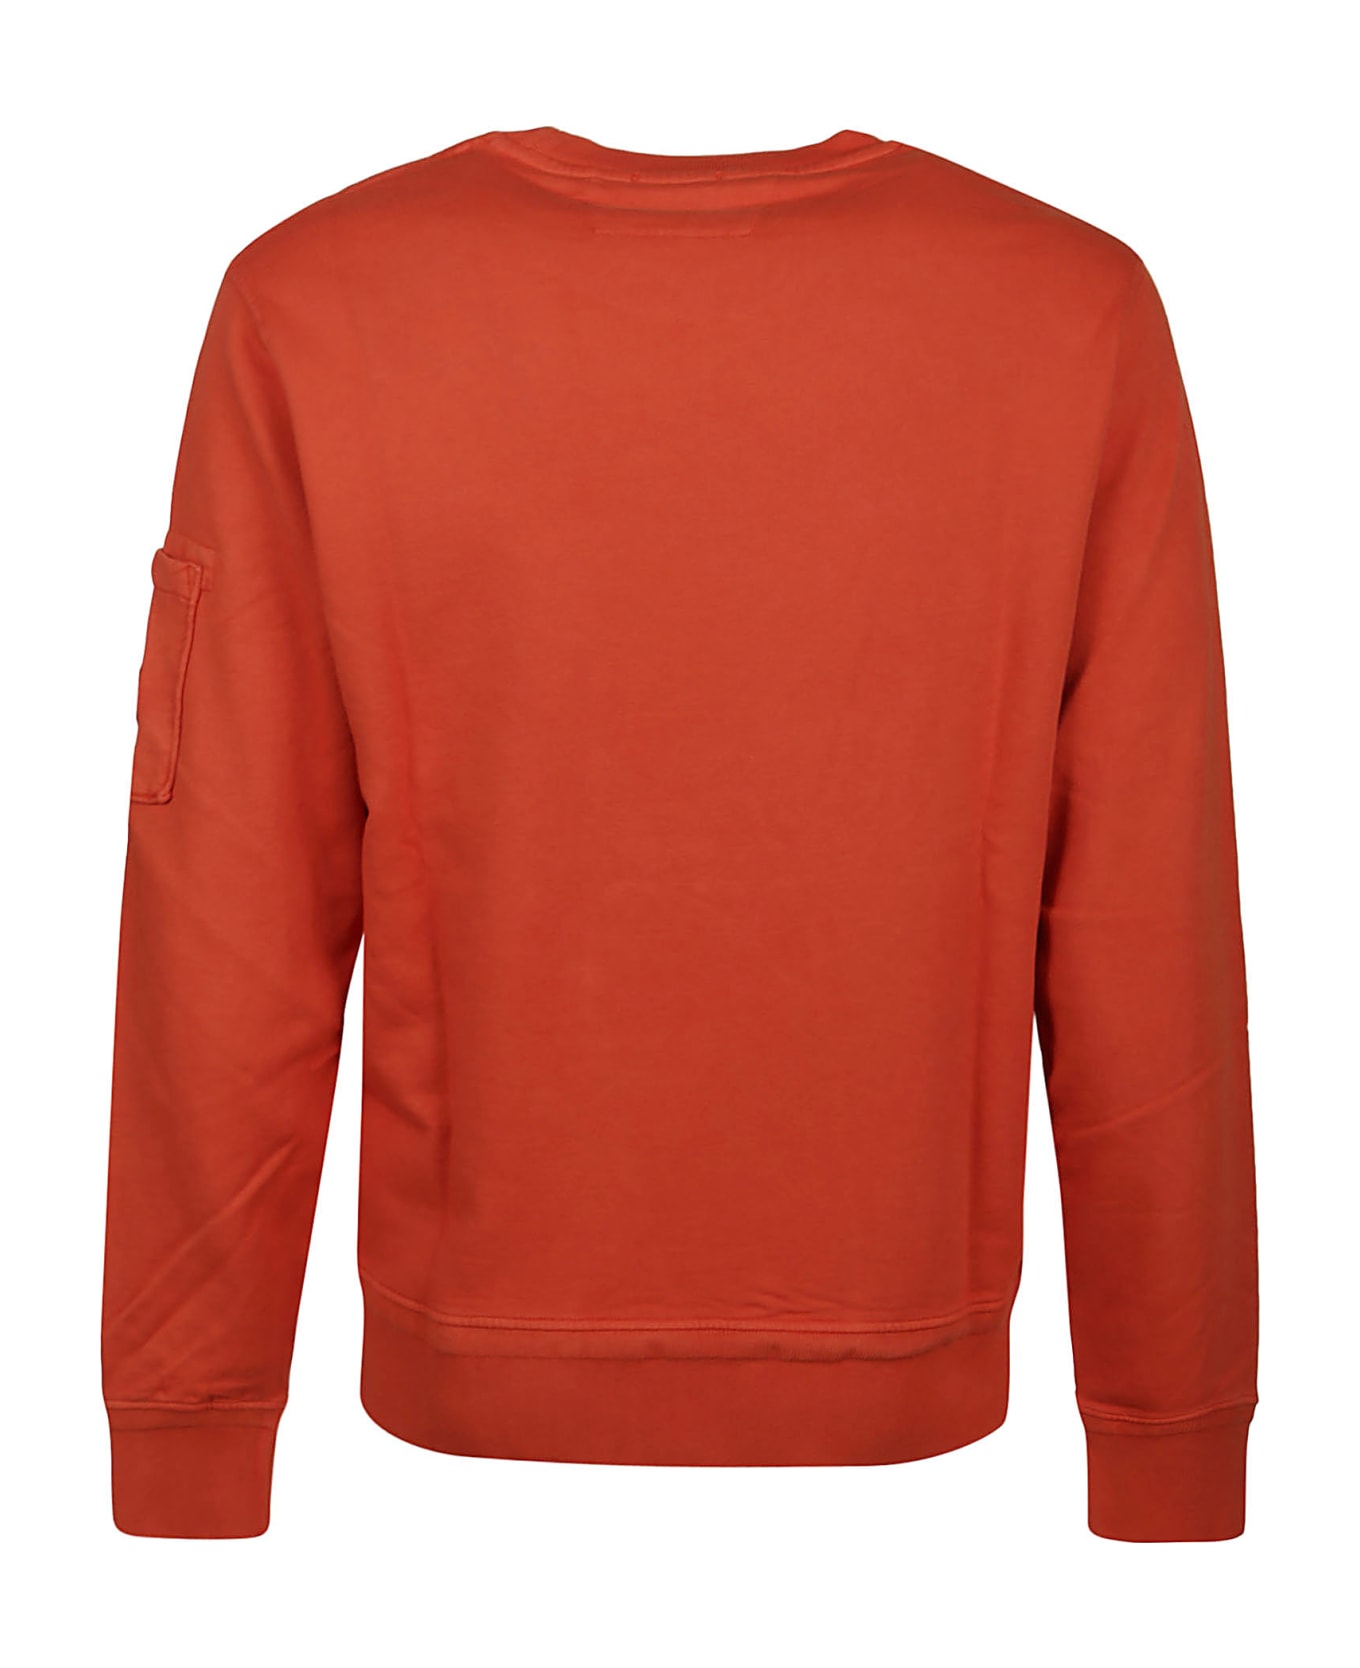 C.P. Company Cotton Fleece Resist Dyed Sweatshirt - Harvest Pumpkin